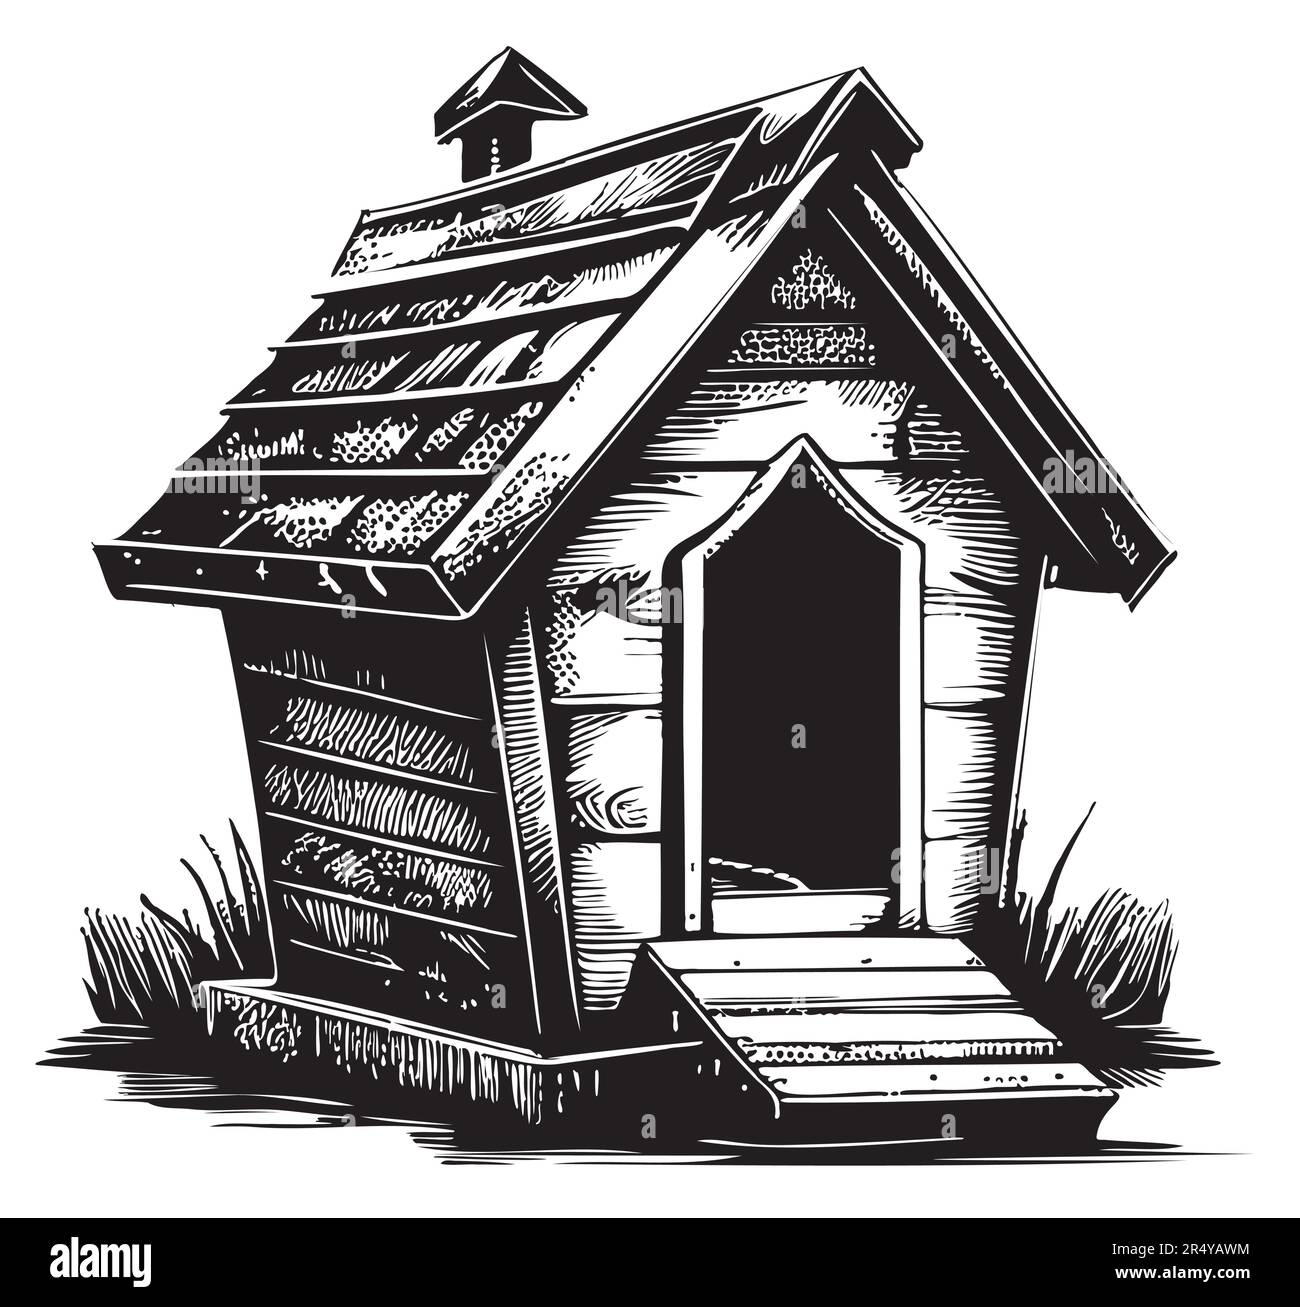 Dog House Cartoon Stock Vector (Royalty Free) 397363918 | Shutterstock